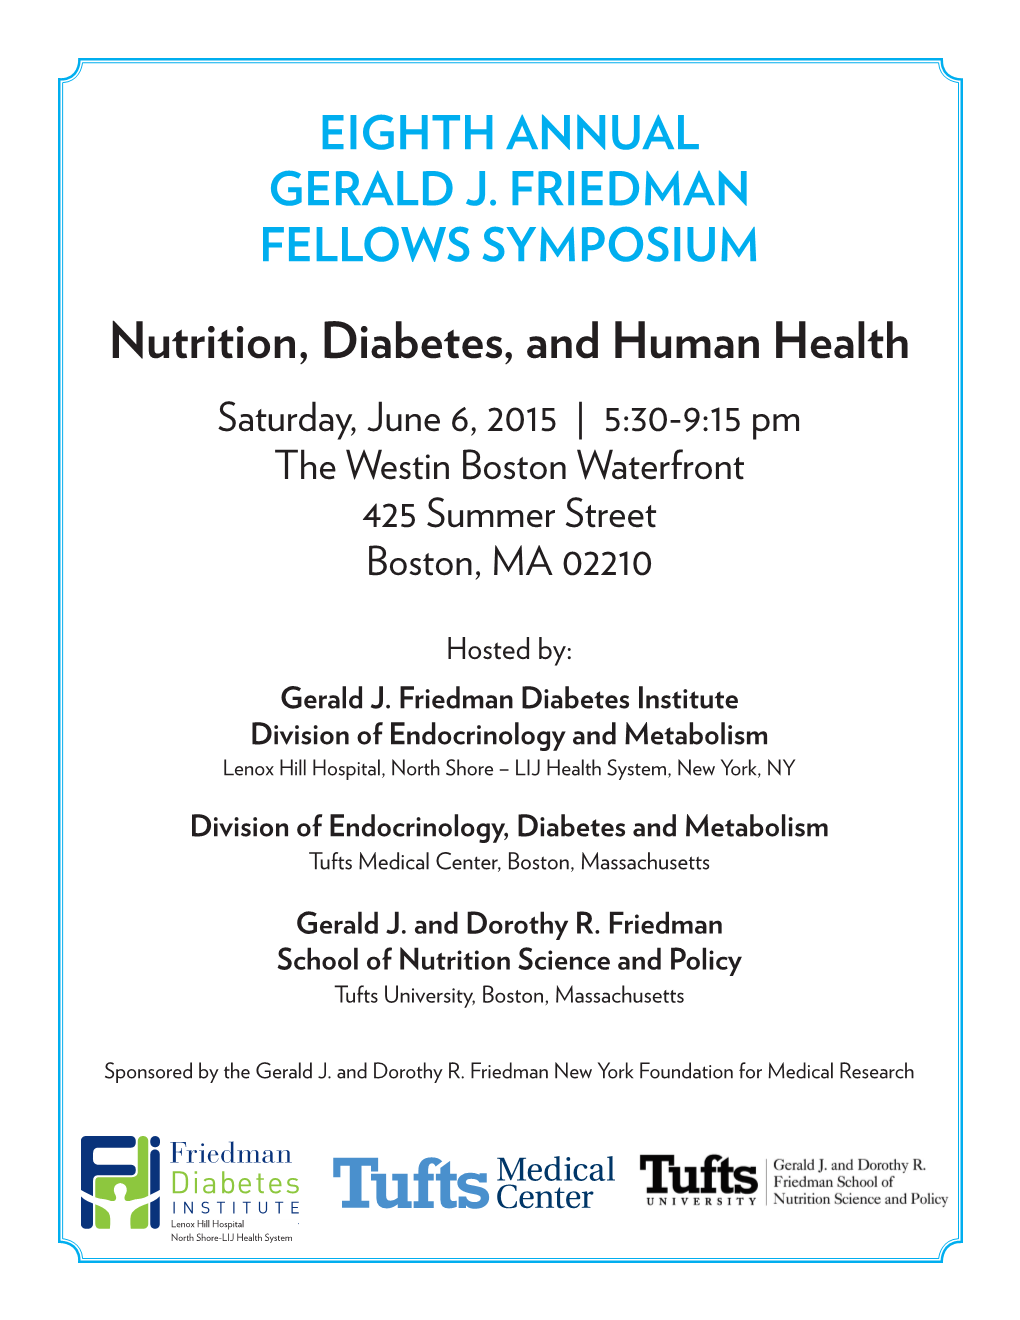 Nutrition, Diabetes, and Human Health Saturday, June 6, 2015 | 5:30-9:15 Pm the Westin Boston Waterfront 425 Summer Street Boston, MA 02210